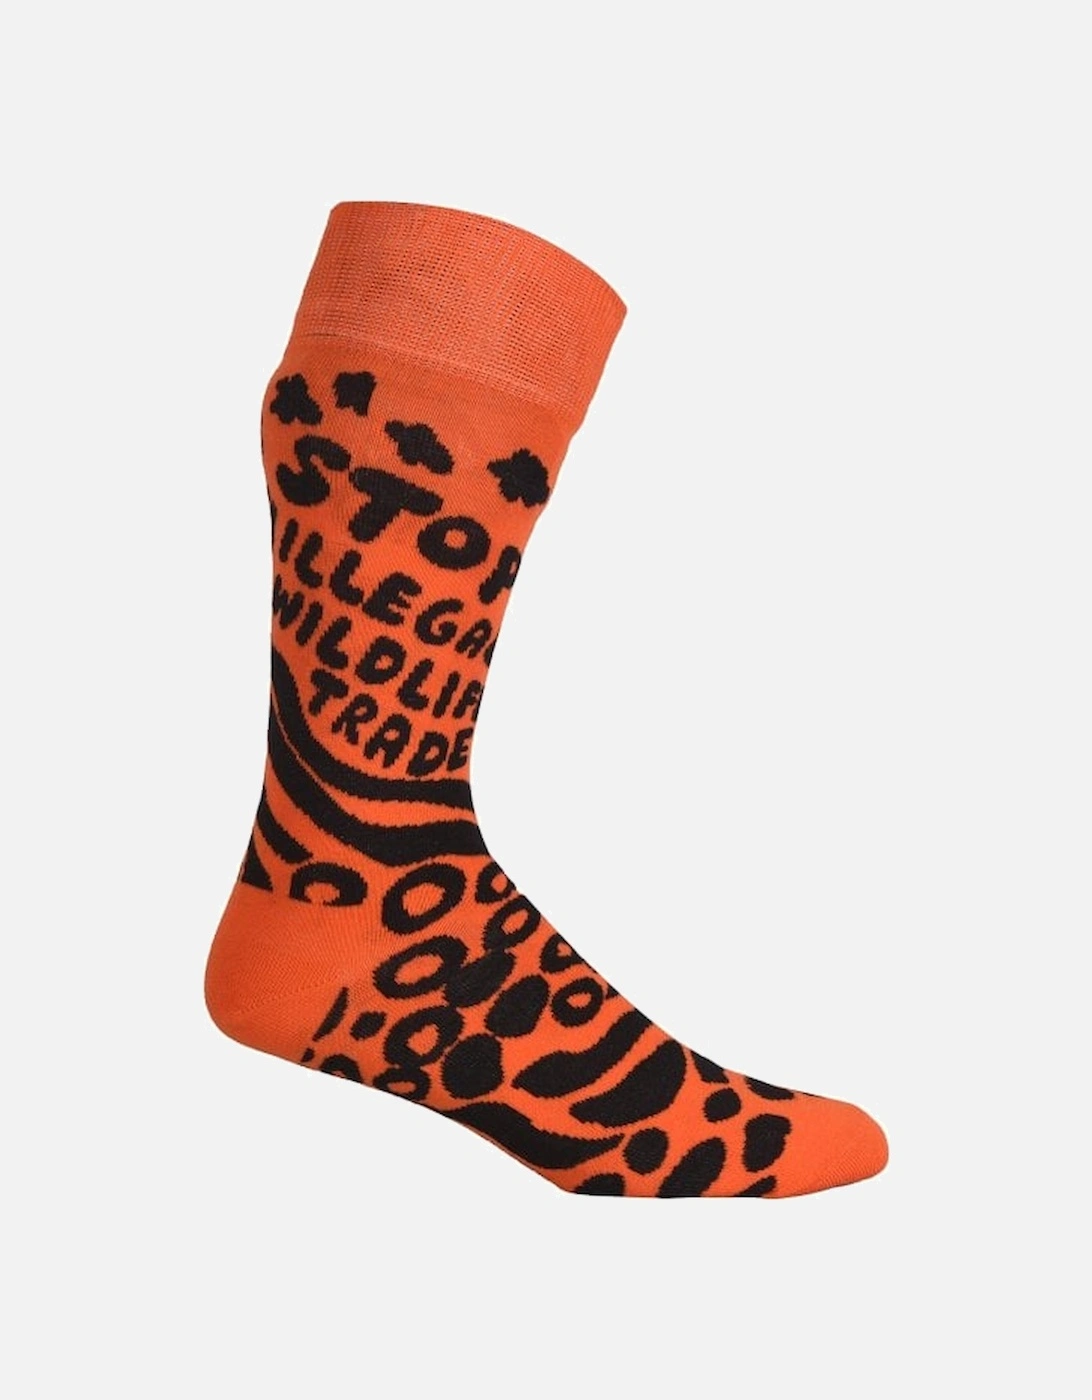 Stop Illegal Wildlife Trade WWF Socks, Orange/black